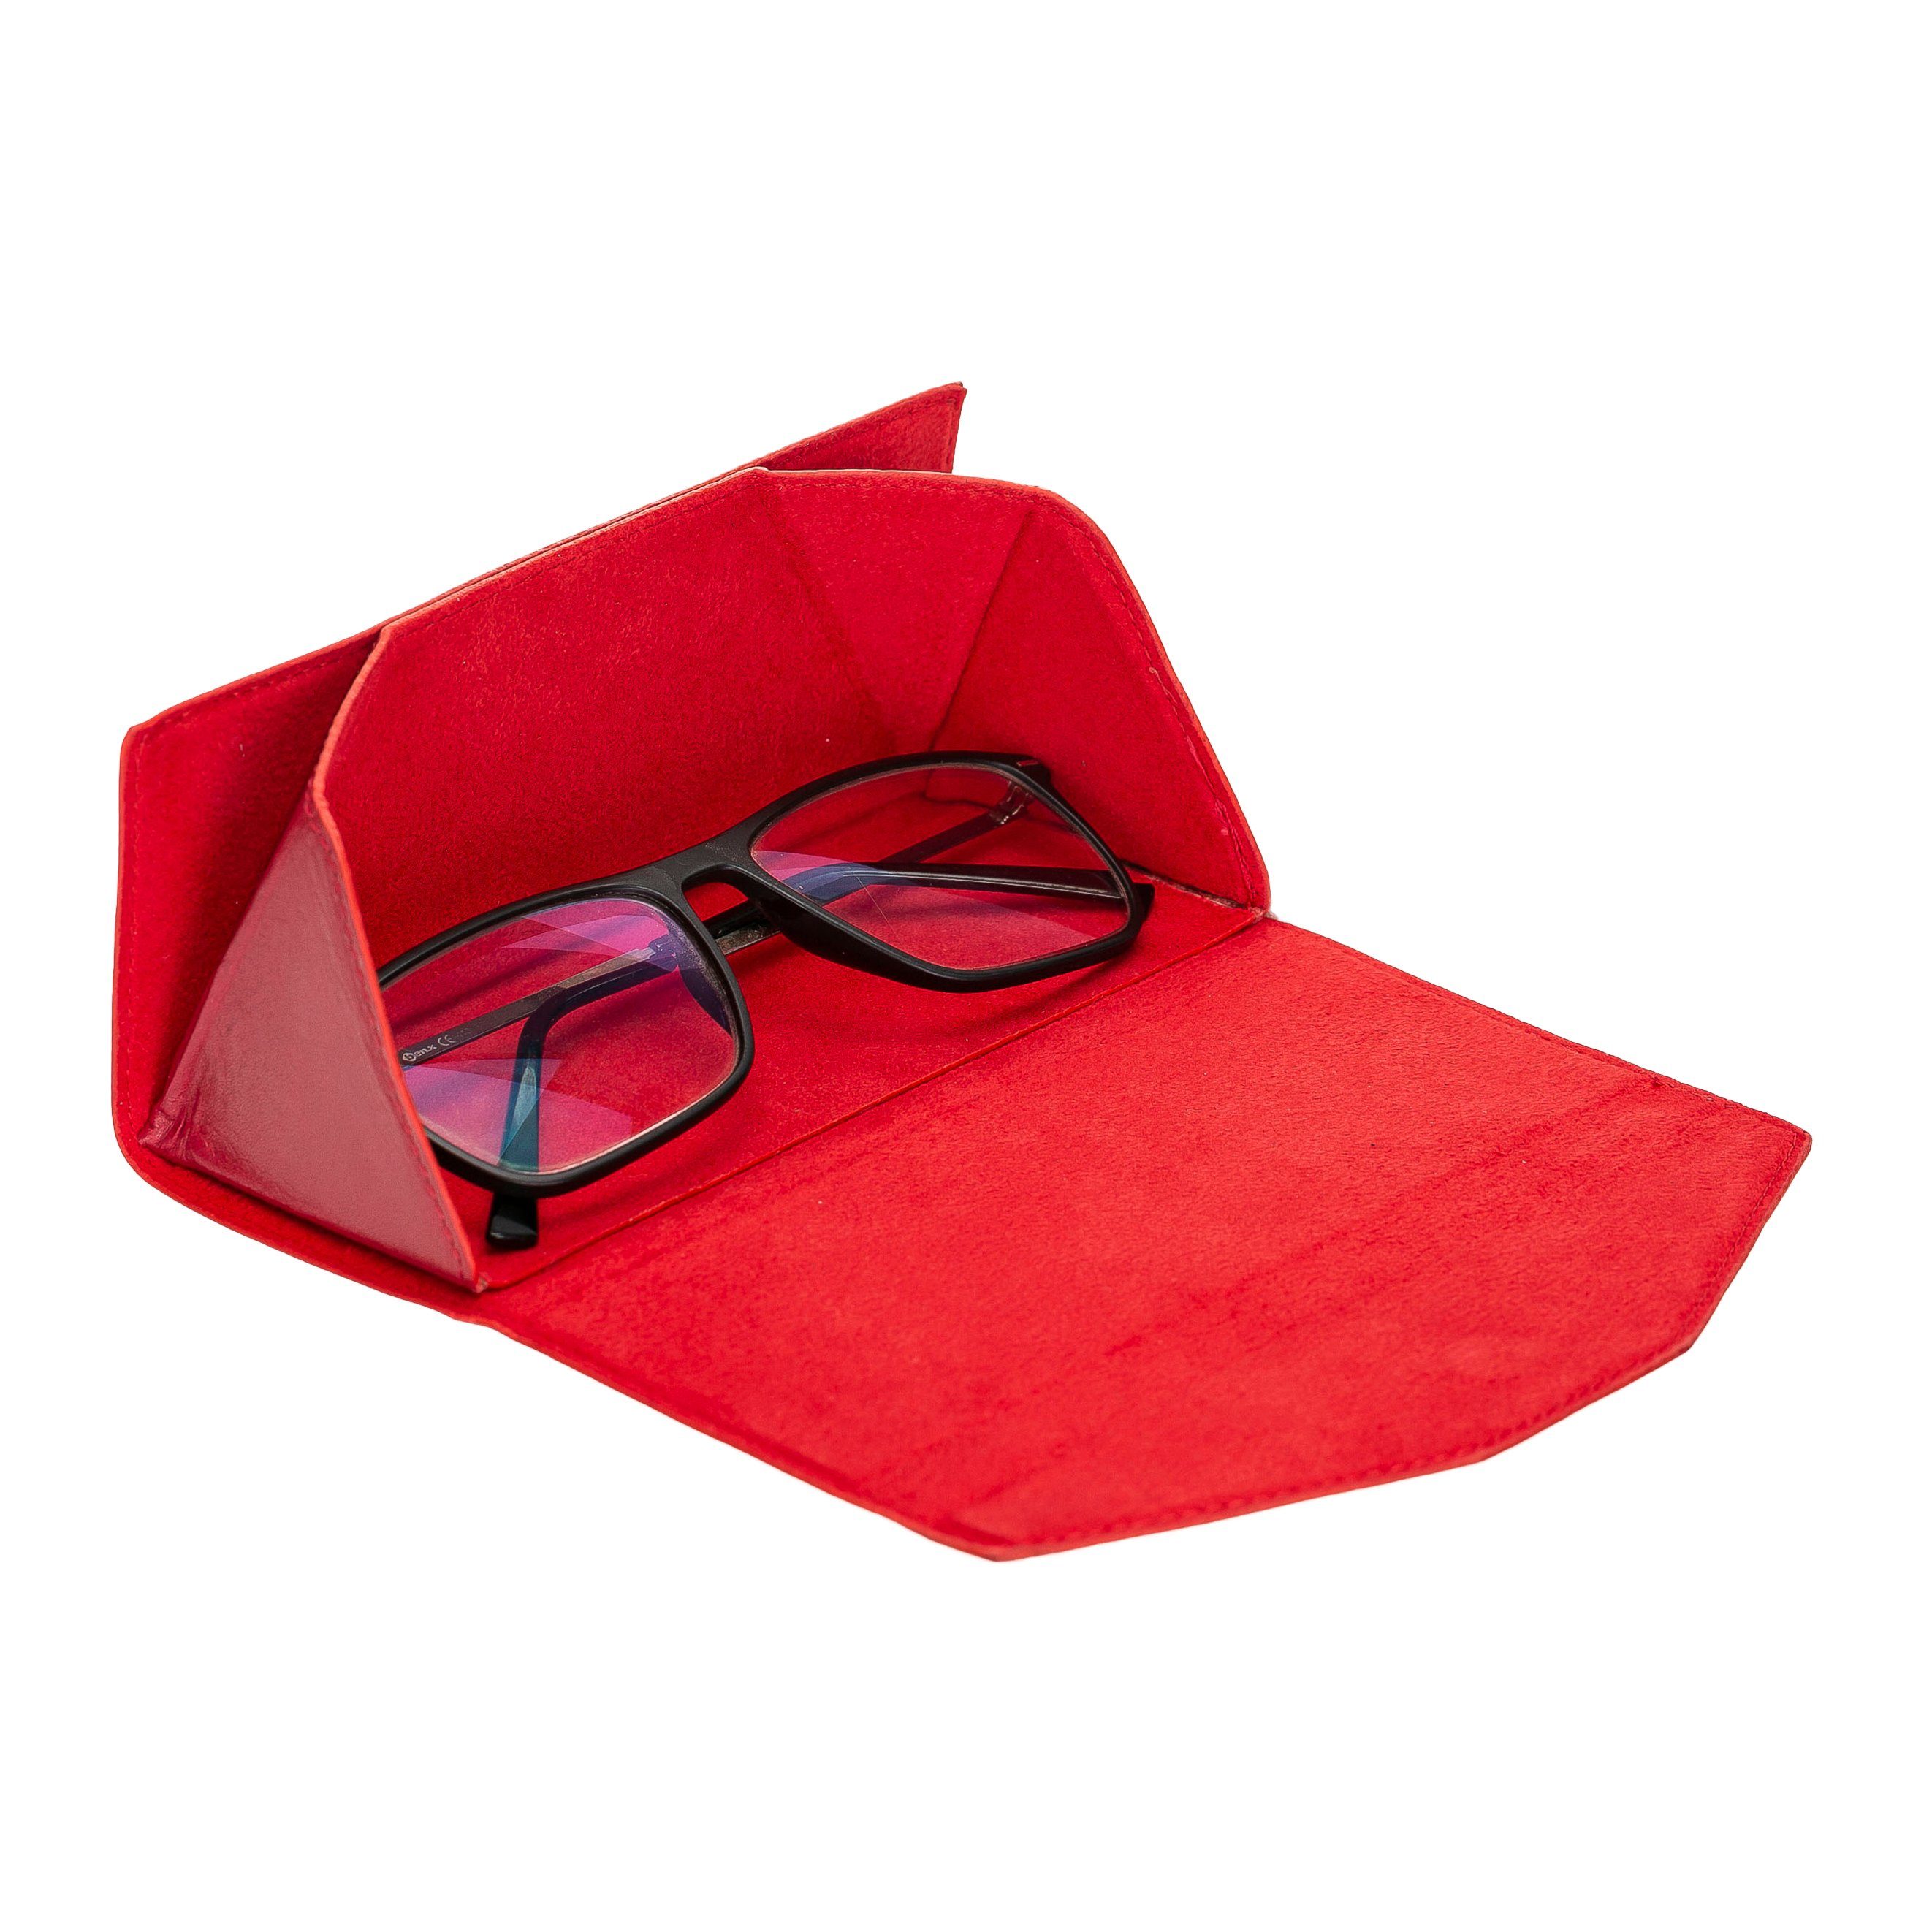 zum Leder, Faltbares Solo echtem Pelle Brillenetui tragbare Brillenbox Brillenetui Rot aus falten